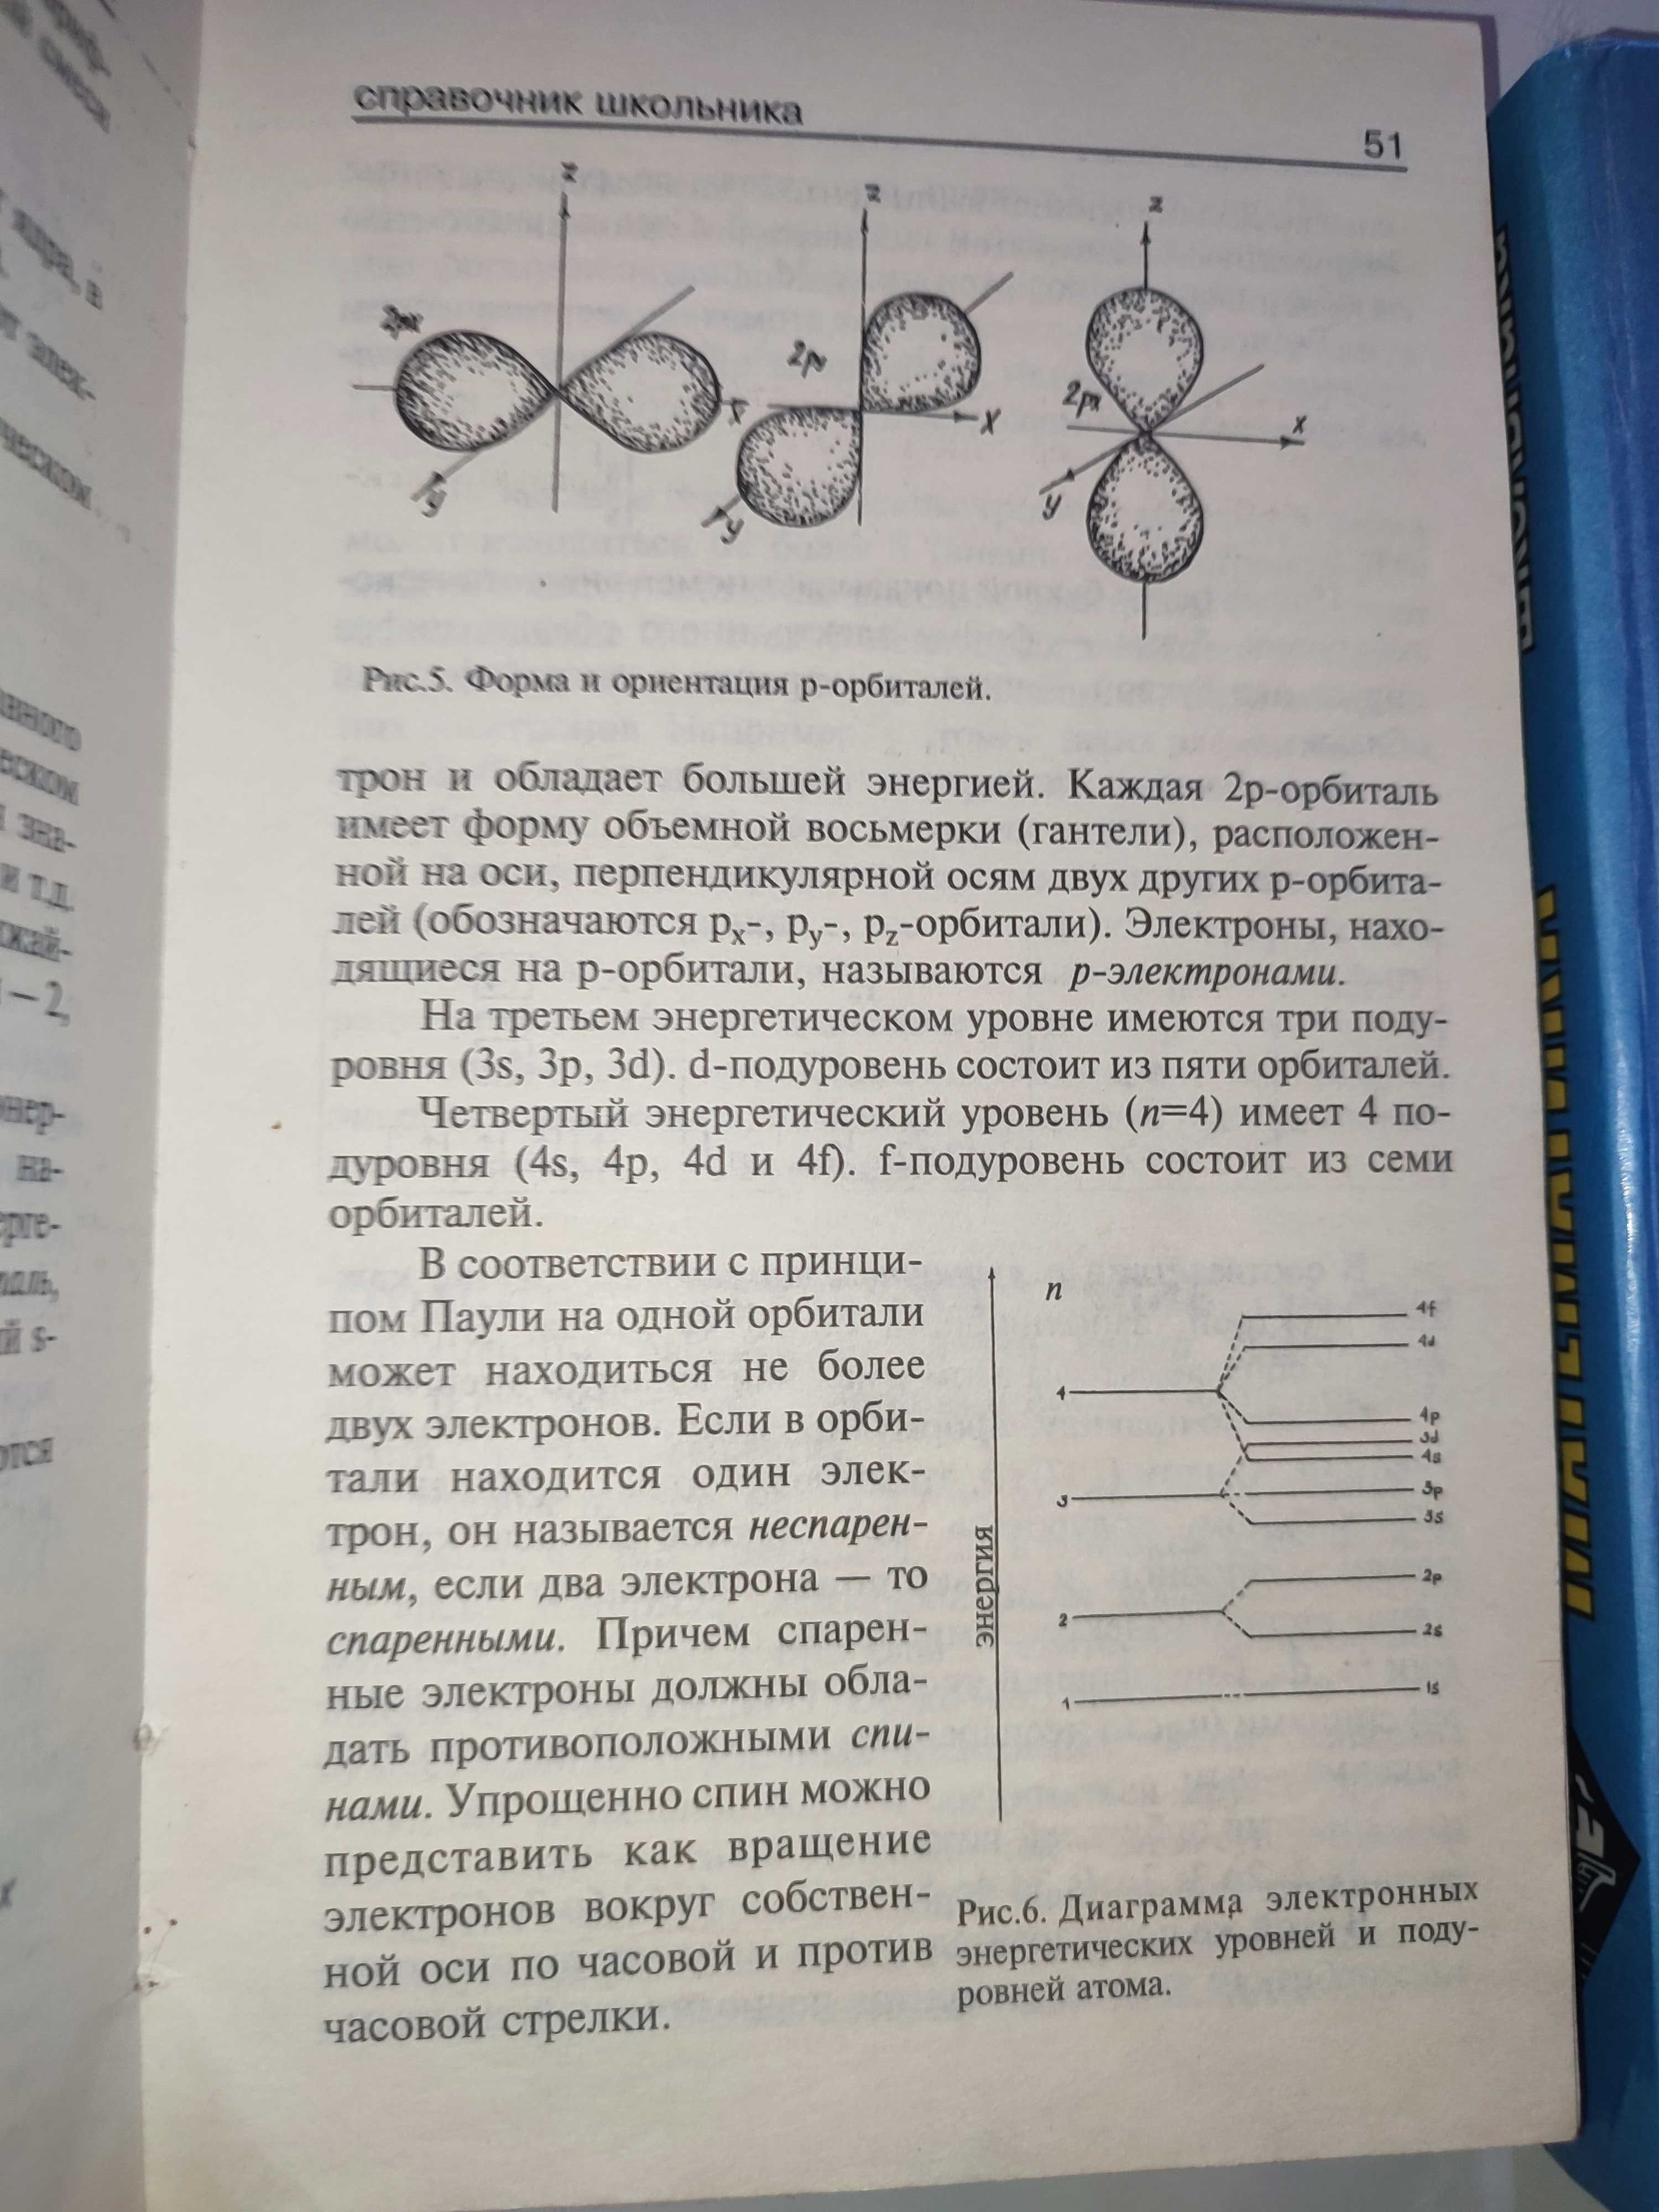 Химия математика физика Справочник школьника комплект